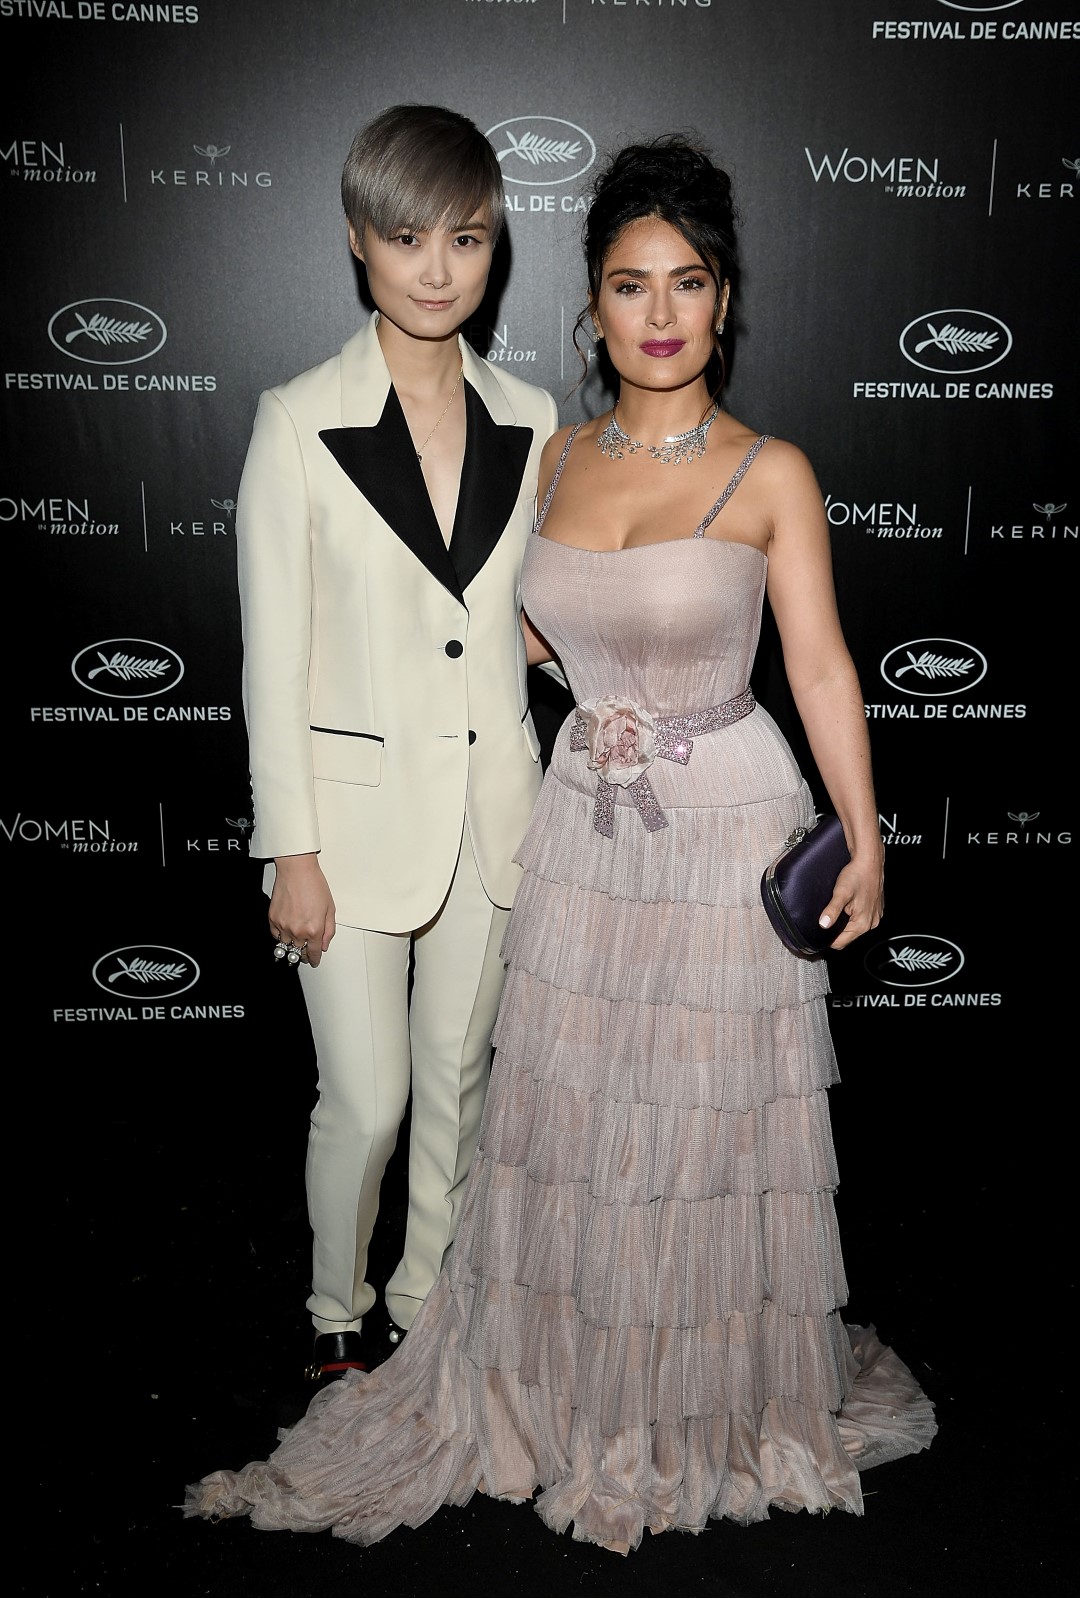 Festival Cannes 2016: Geena Davis e Susan Sarandon premiate al Kering Women in Motion Awards 2016, le foto